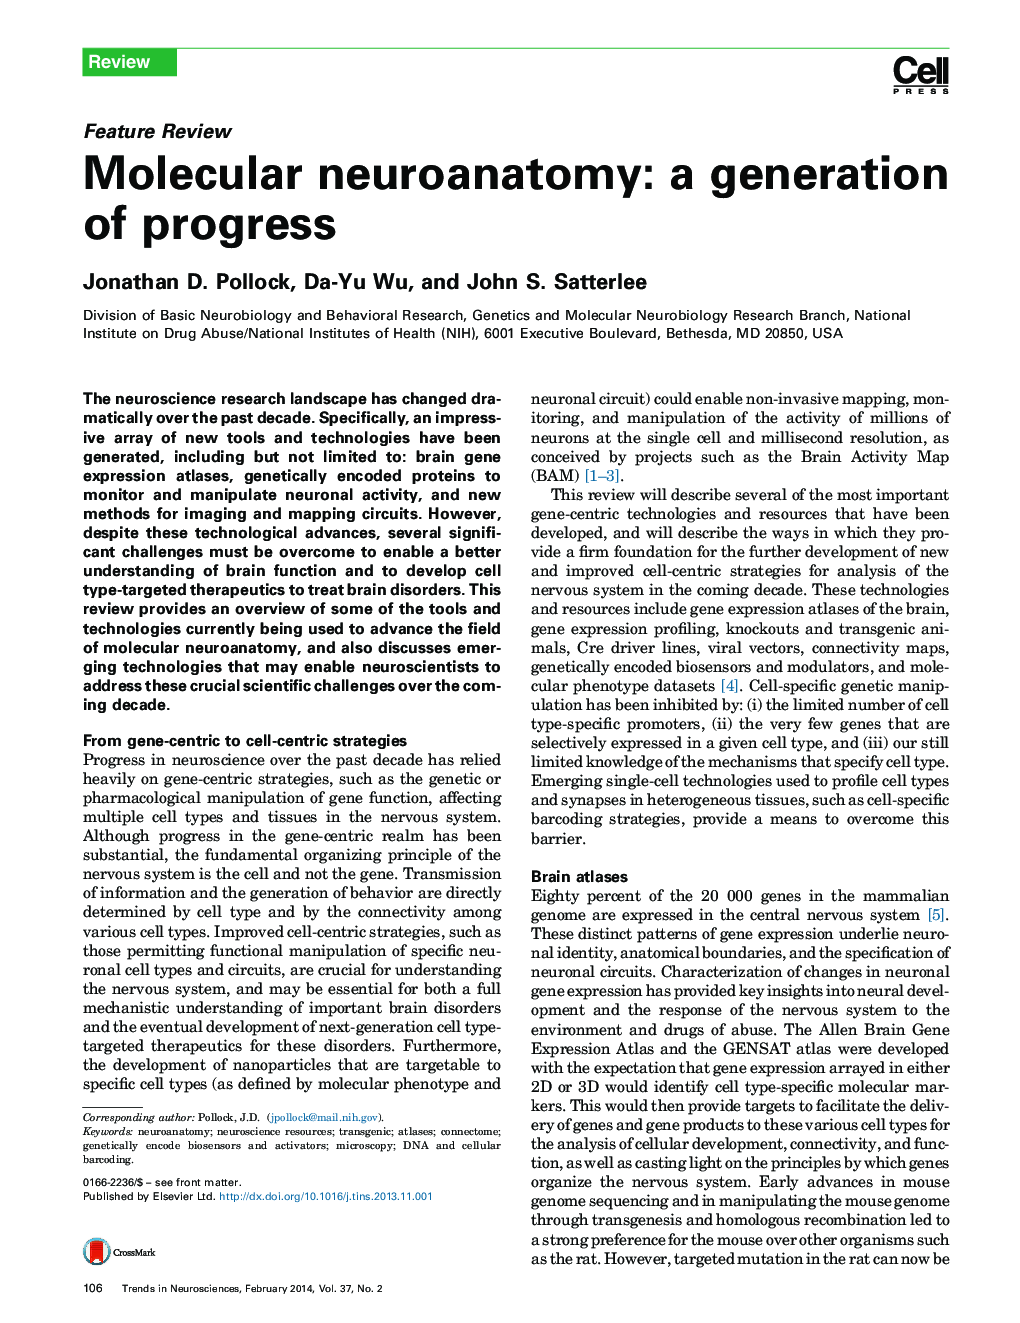 Molecular neuroanatomy: a generation of progress